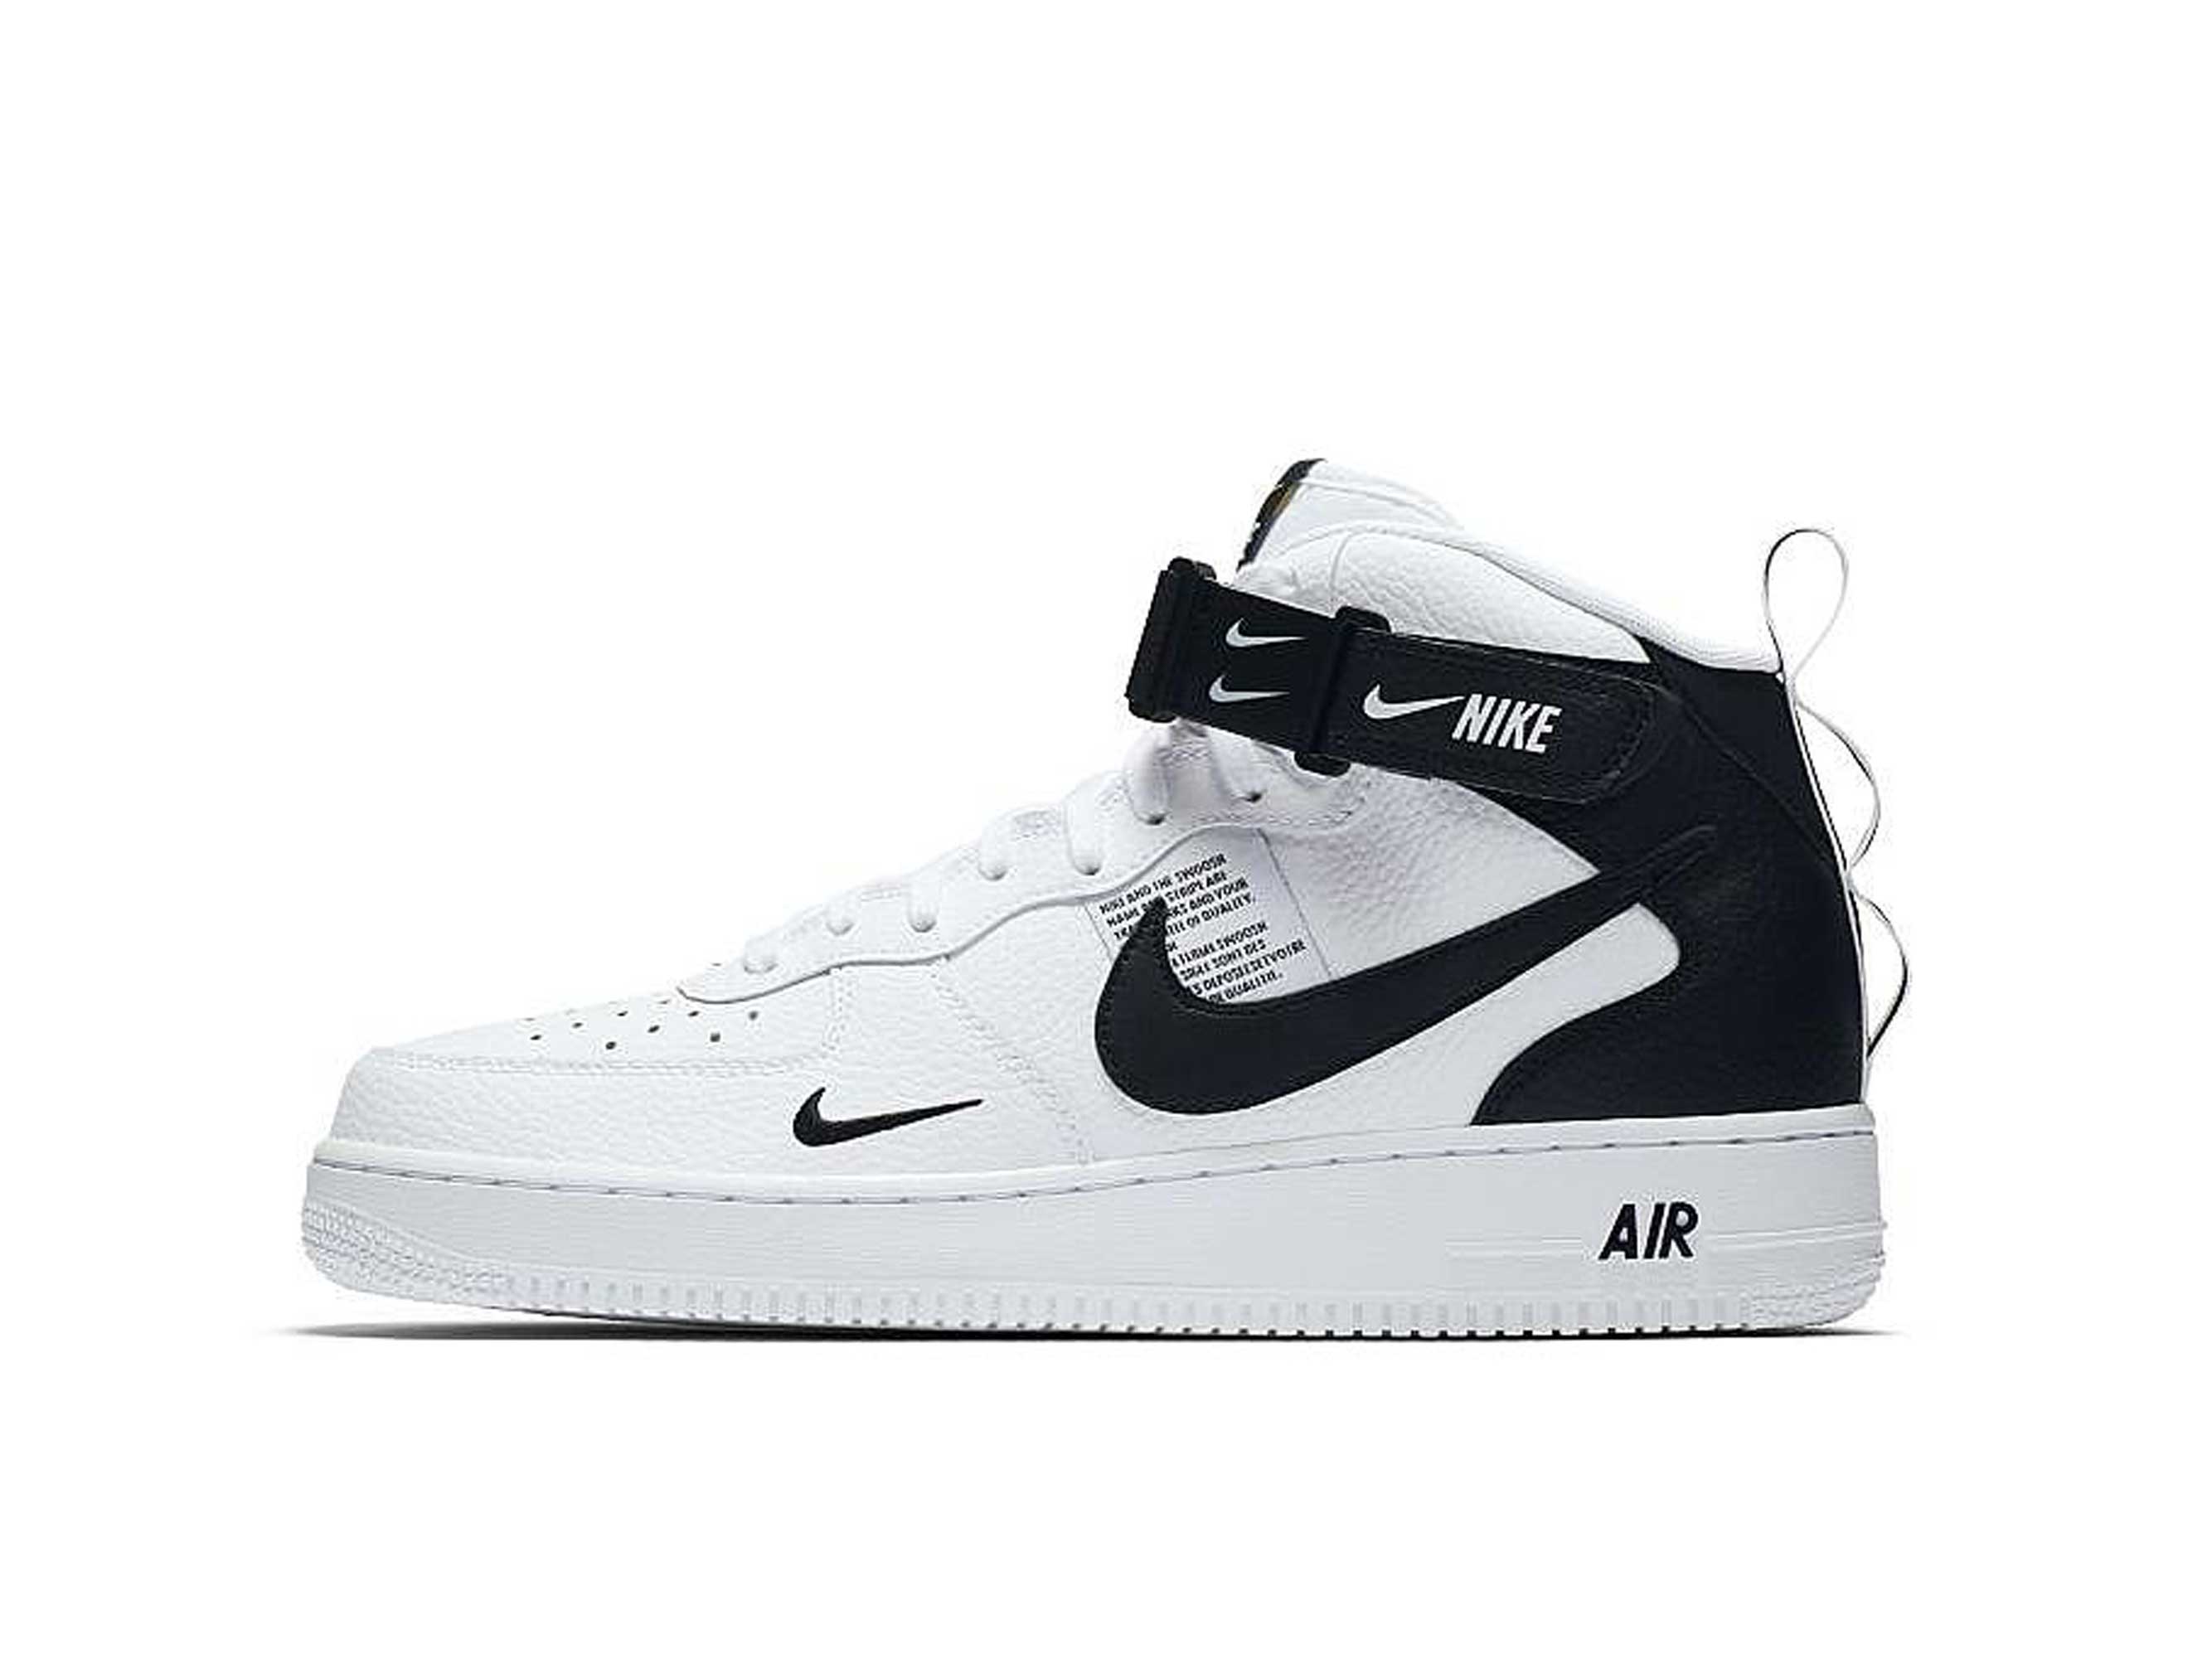 Nike Air Force 1 07 Mid lv8 White